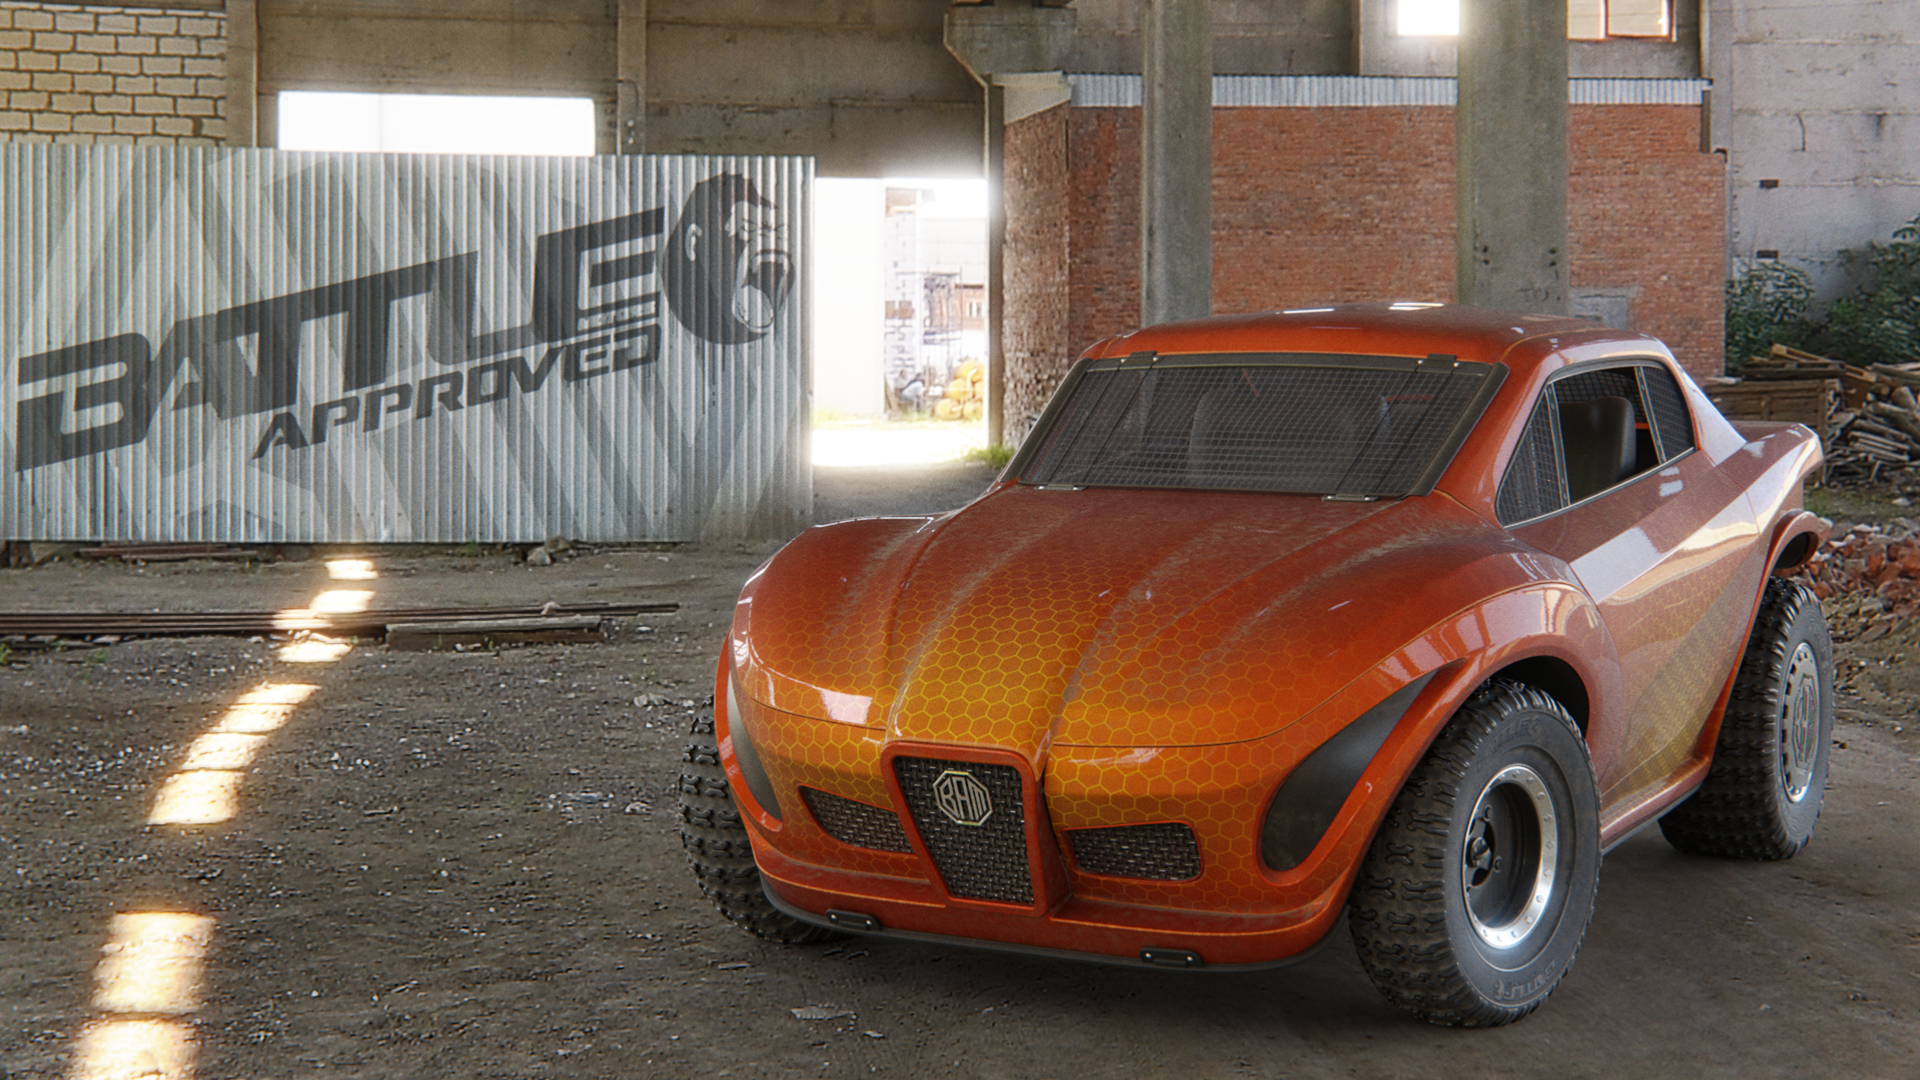 The orange Battle Approved Motors racing r101 model.